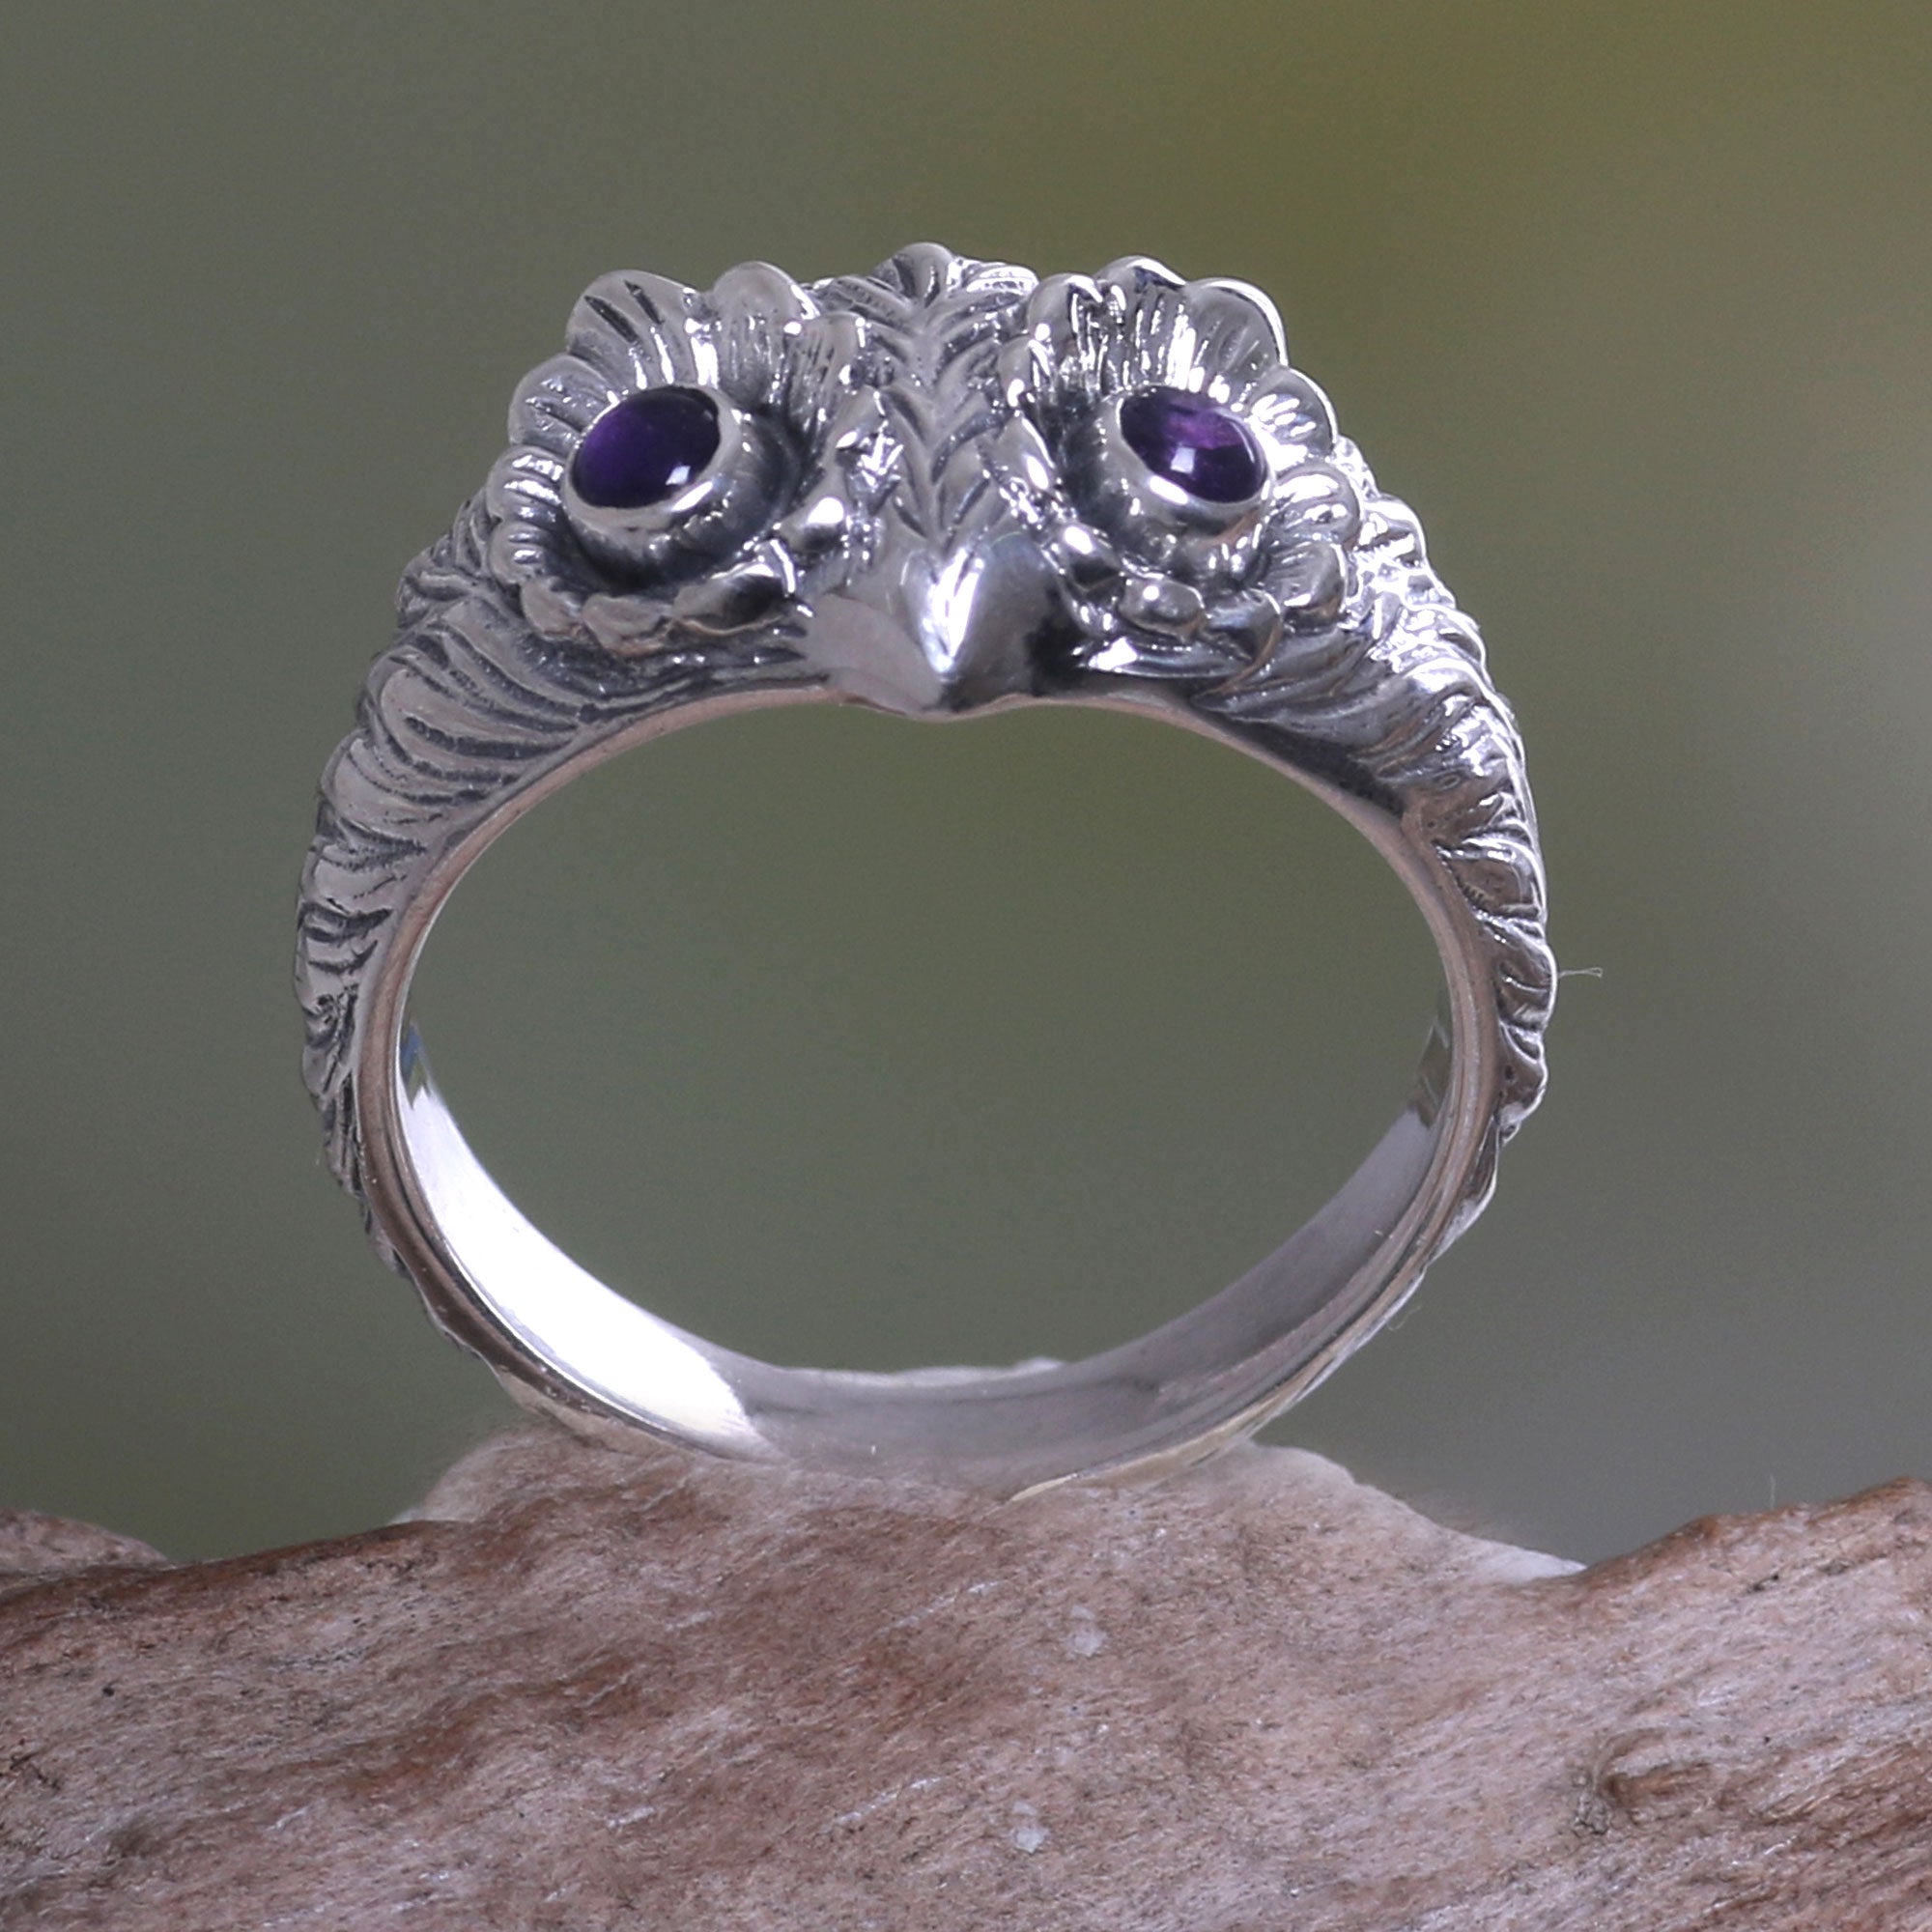 NOVICA Owl Wisdom Amethyst & Silver Band Ring - Size 9